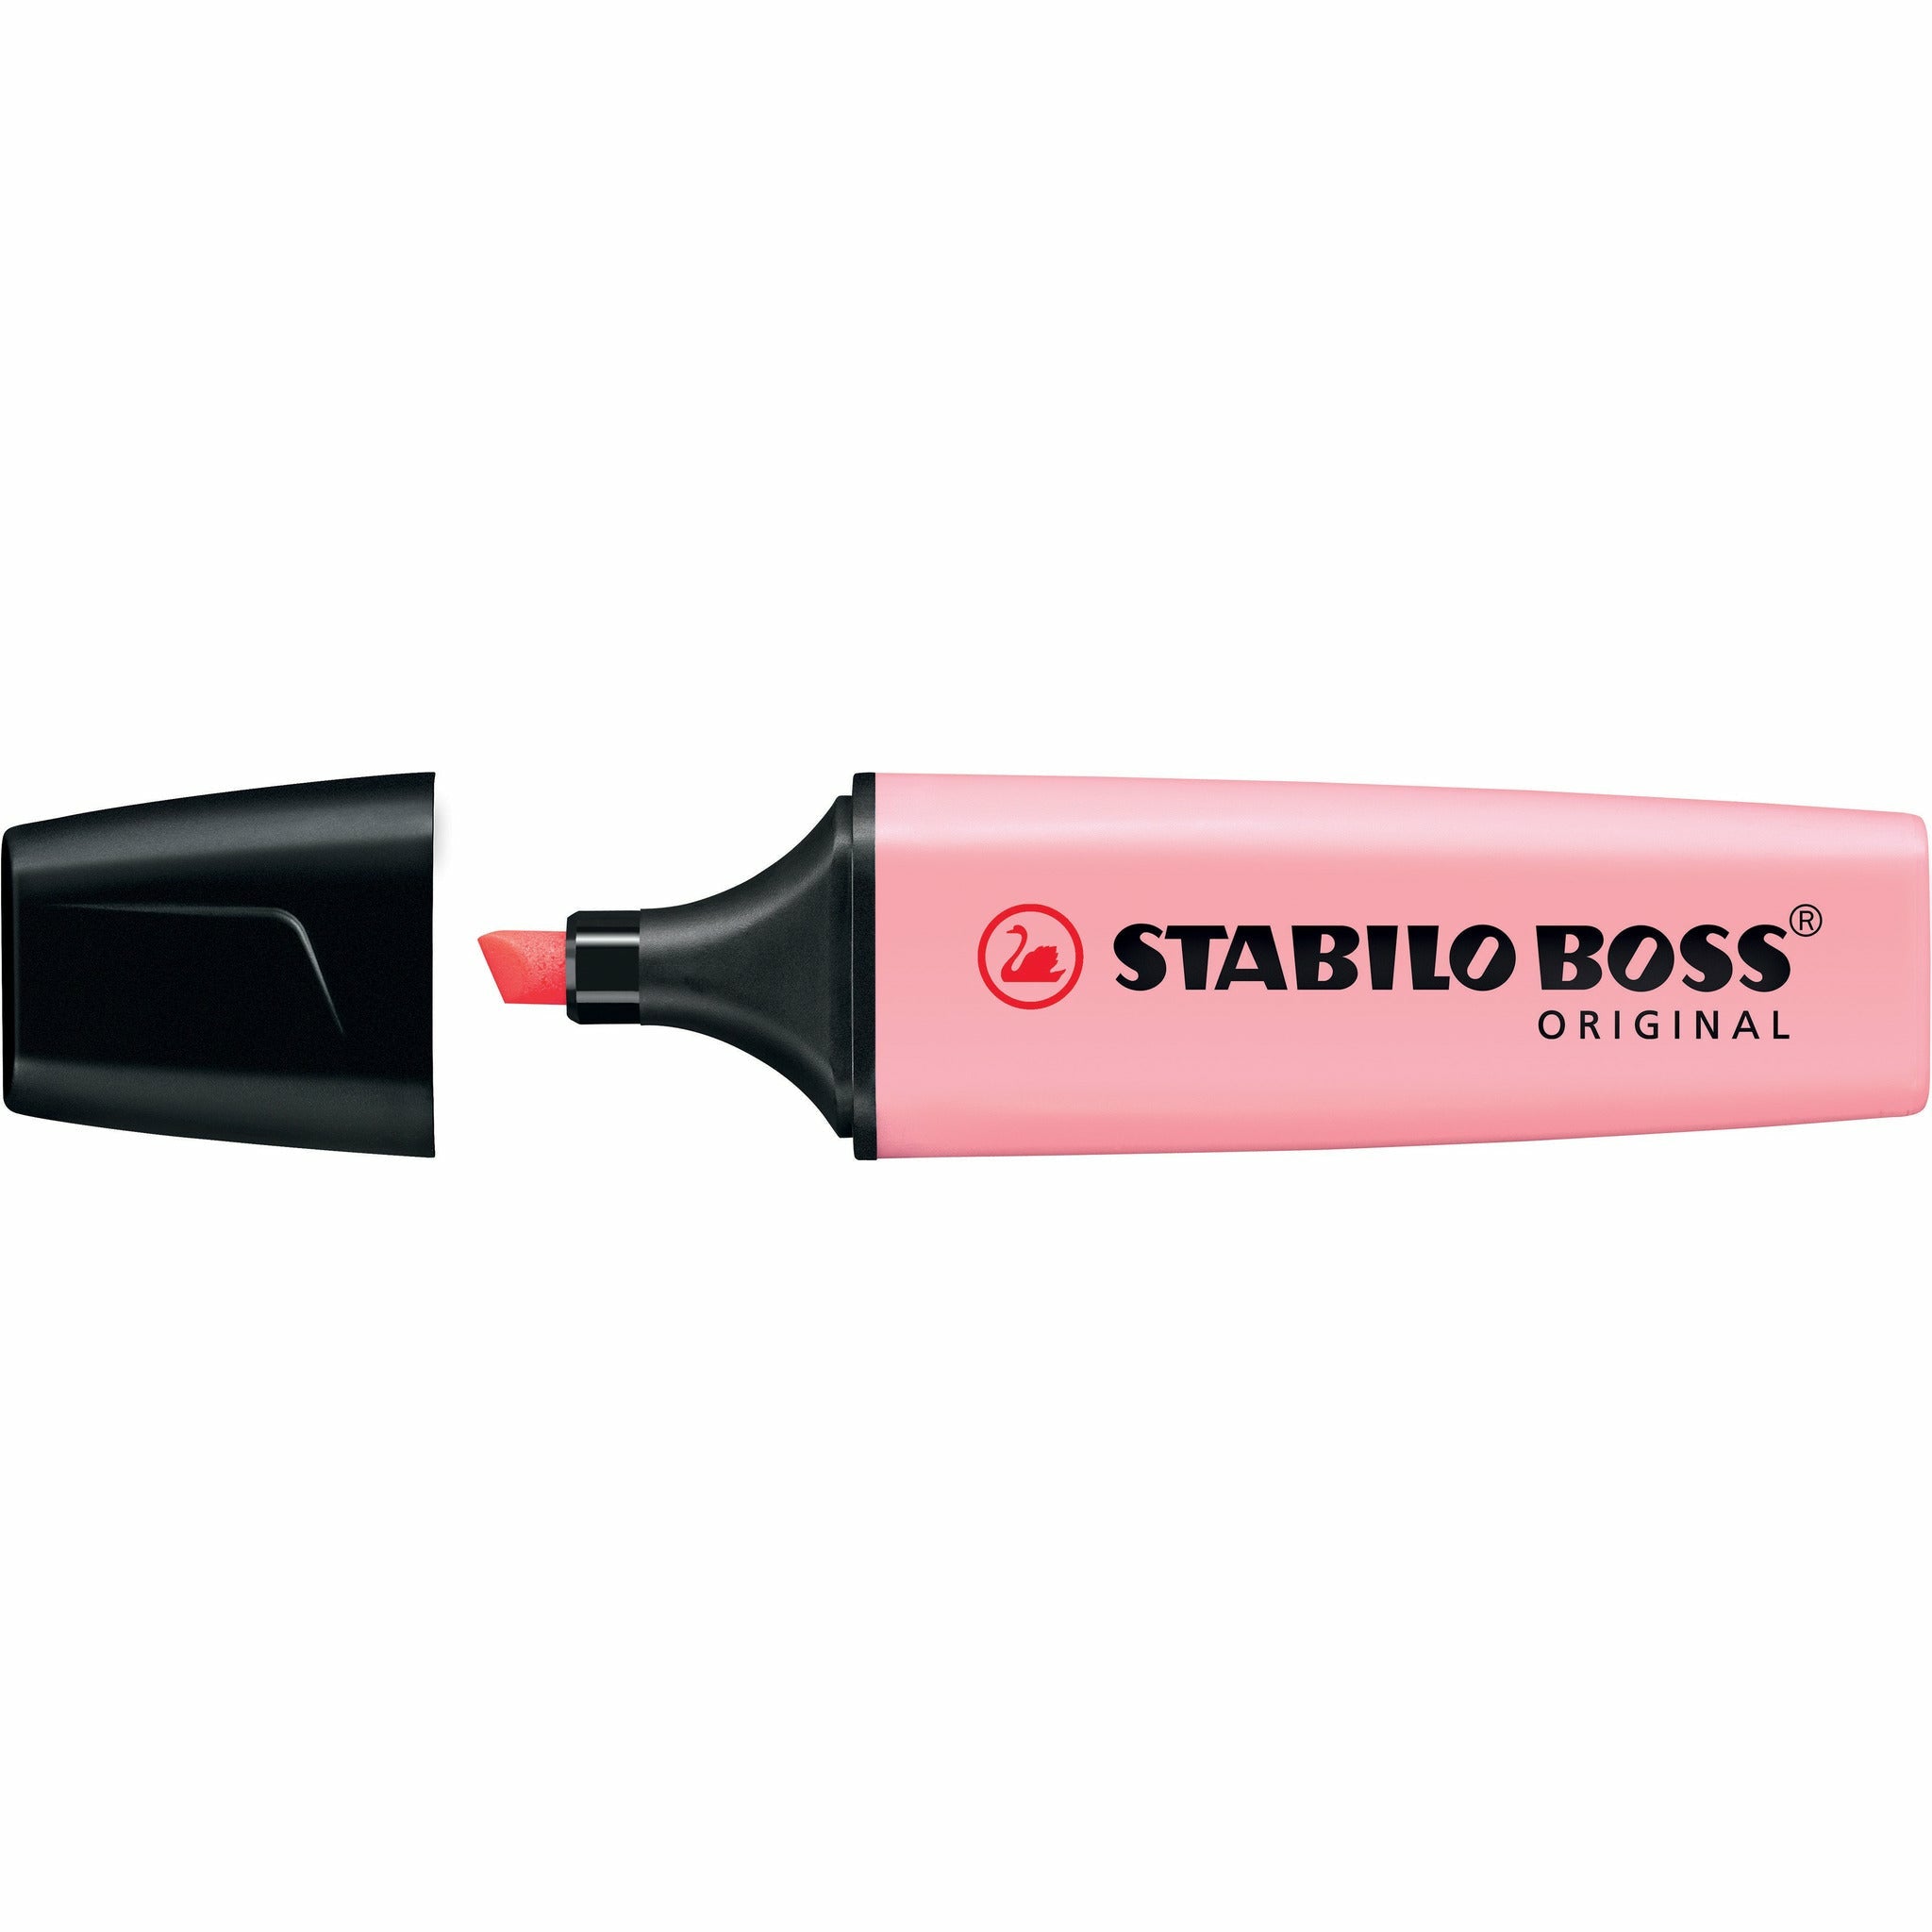 STABILO BOSS Original pastel pink blush